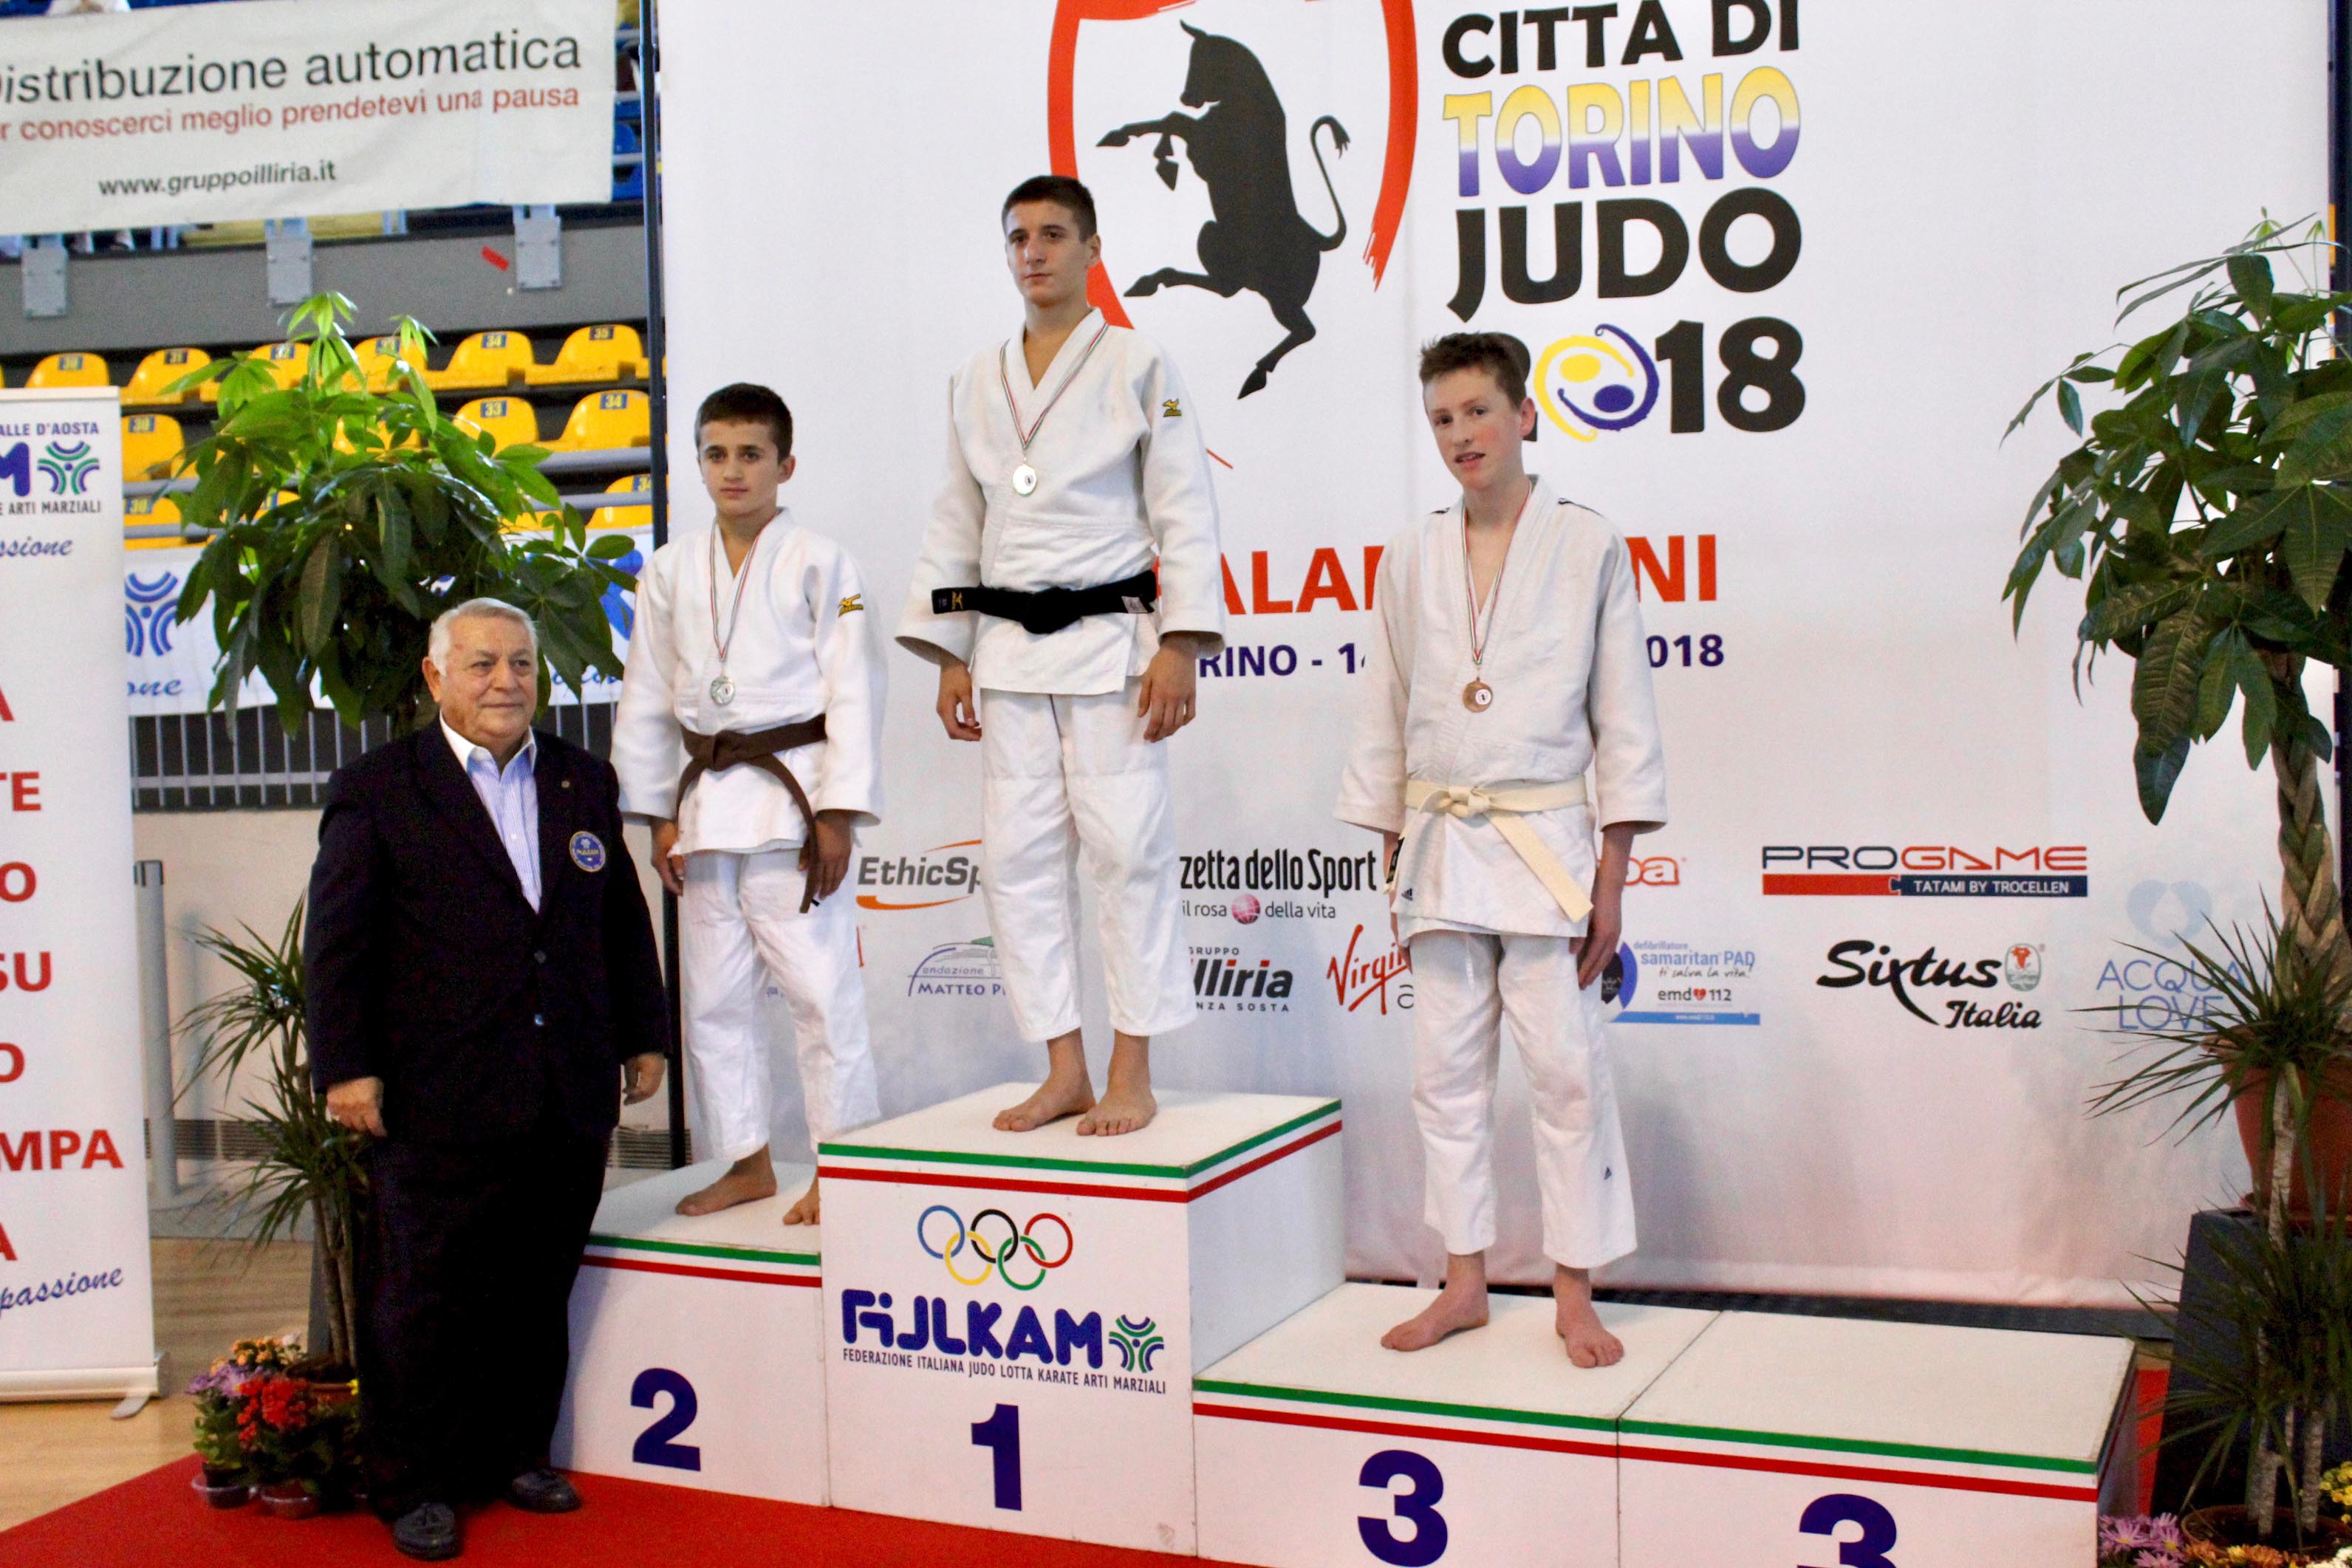 judo: trofeo città di torino+kodokanbiella